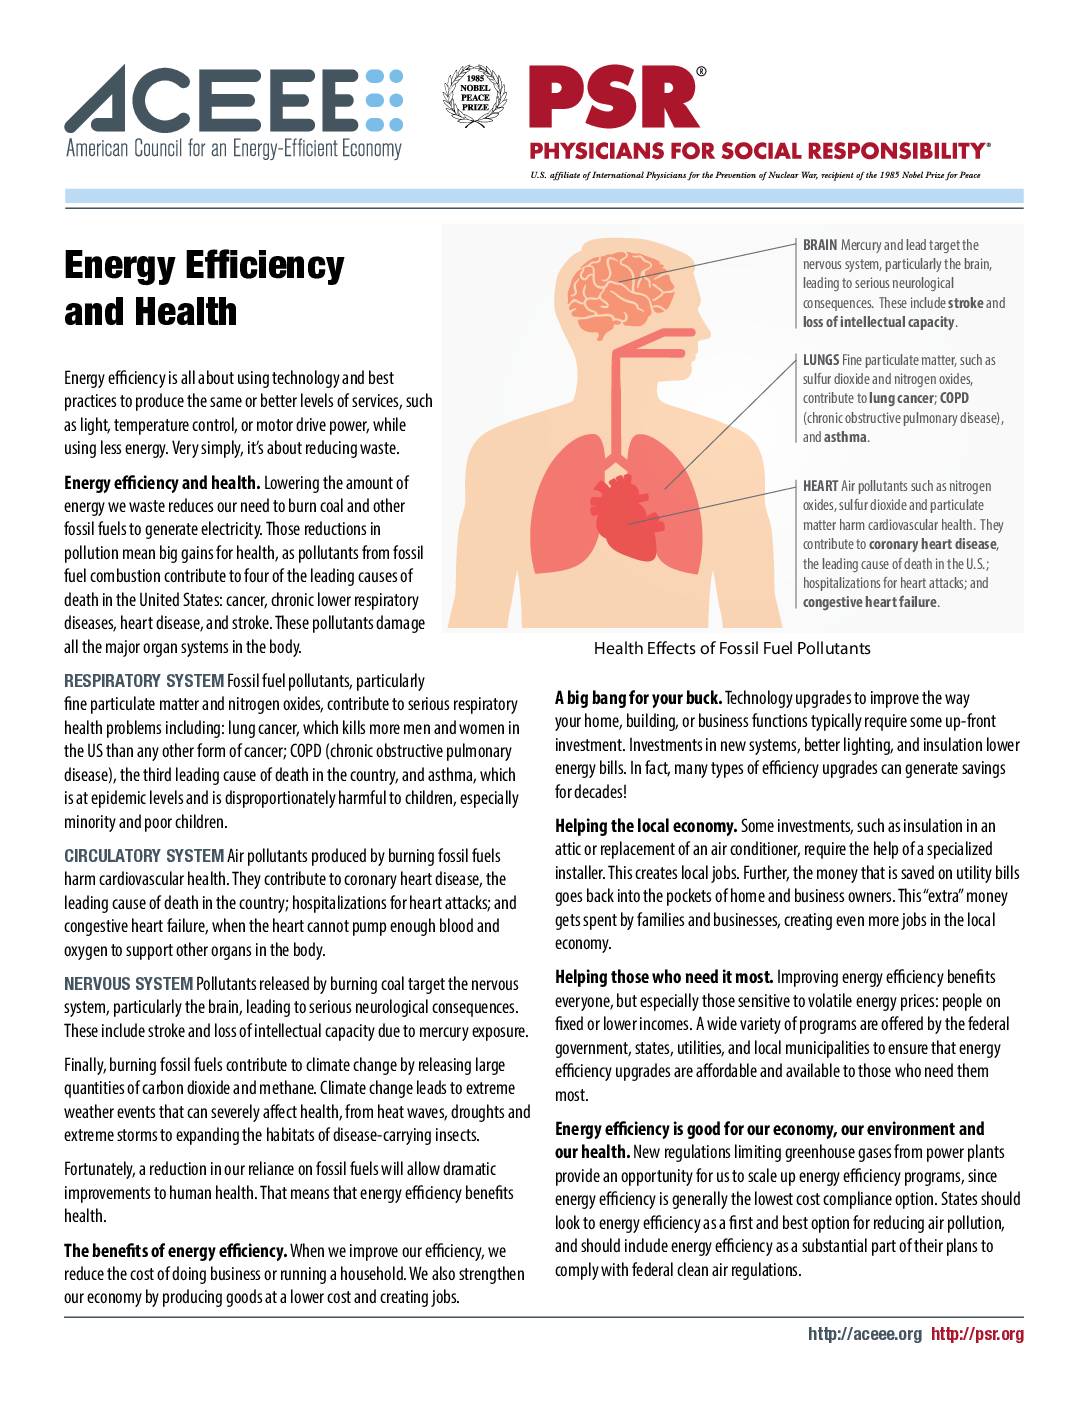 Energy Efficiency and Health